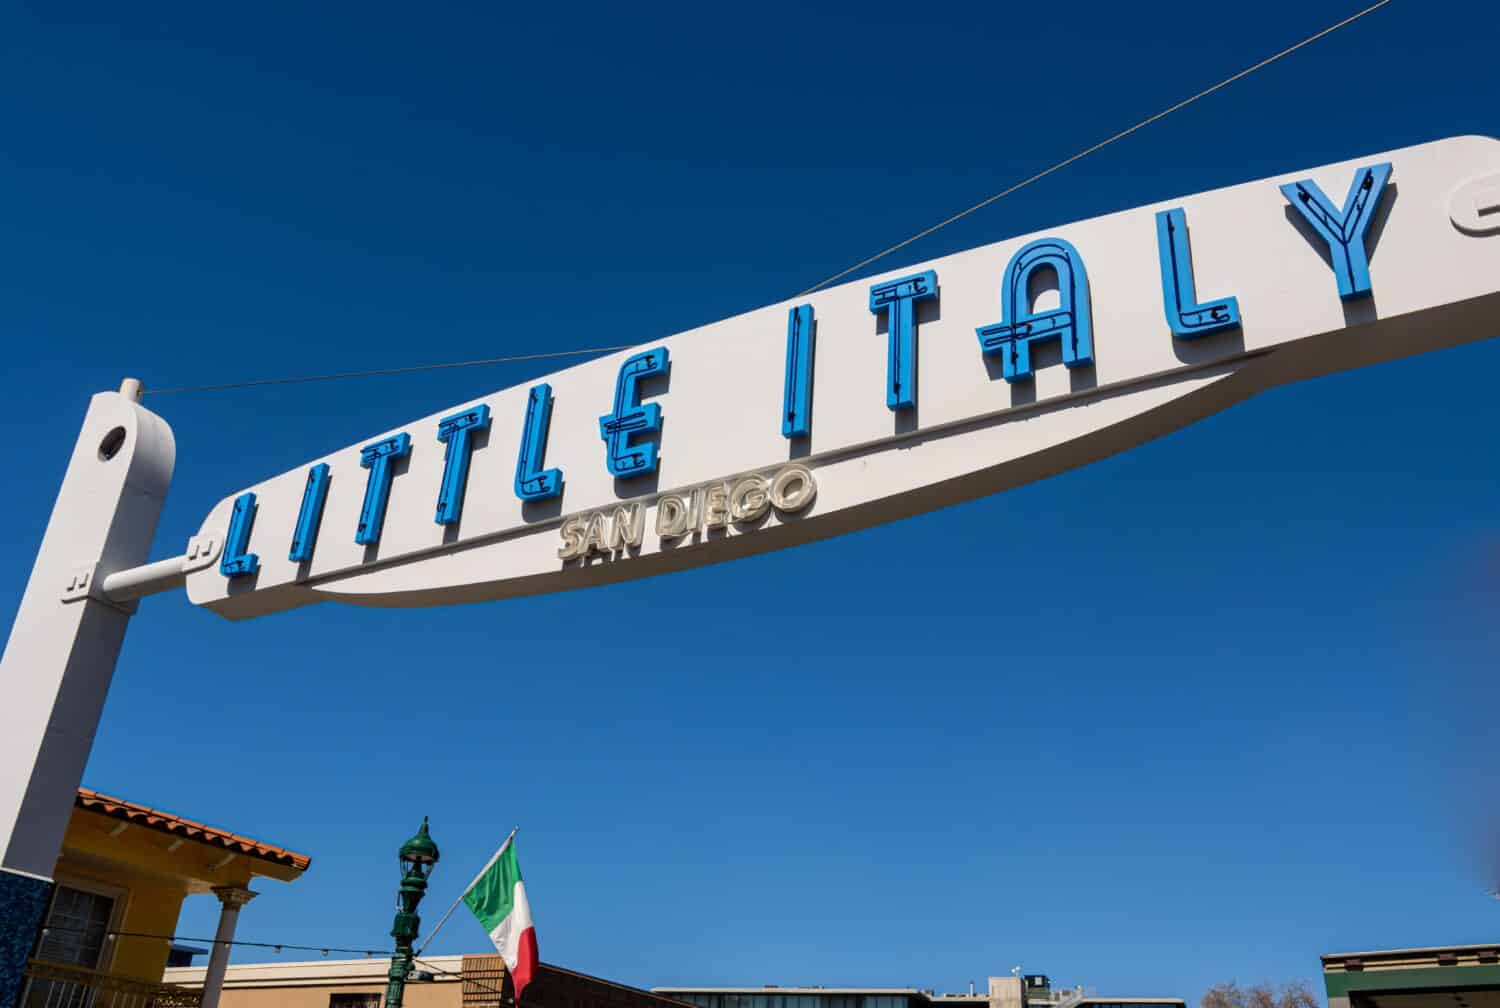 Historic Little Italy Sign, San Diego, California, USA